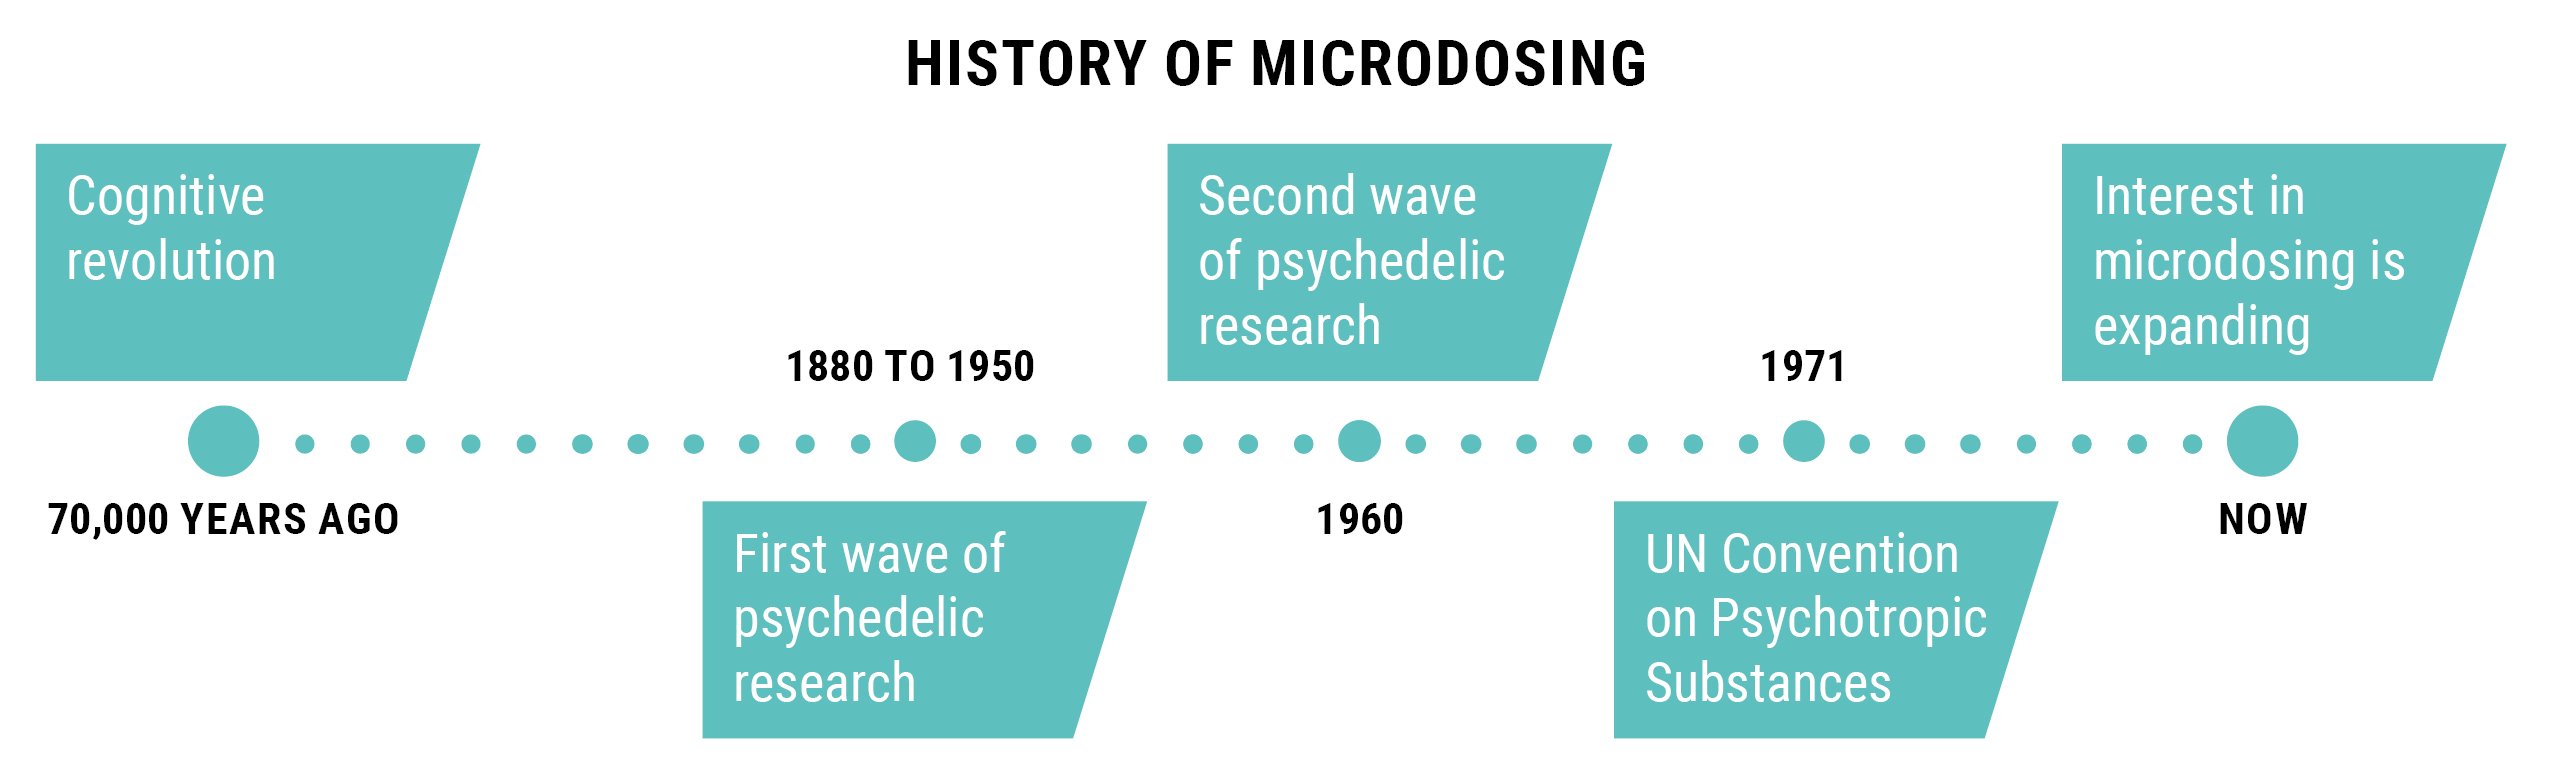 HISTORY OF MICRODOSING